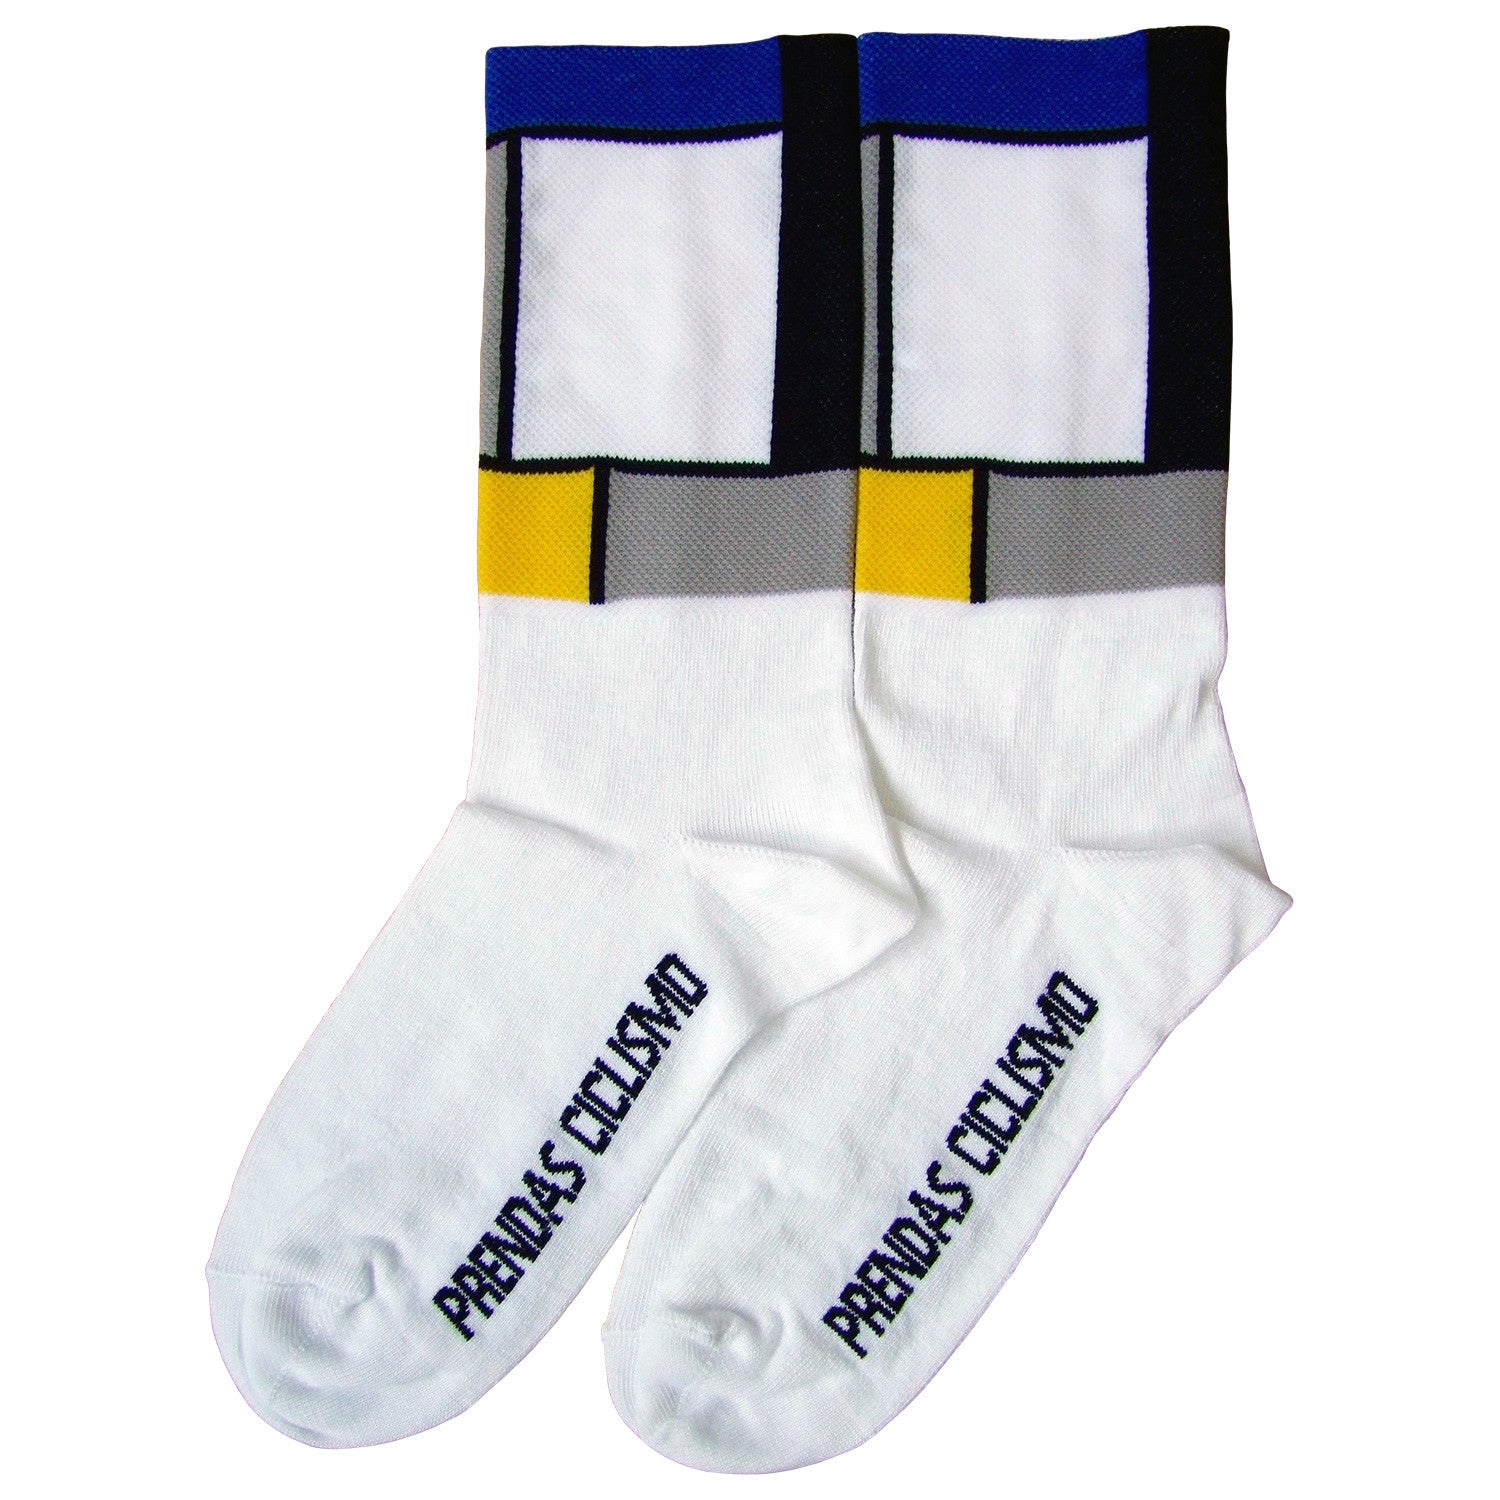 La Vie Claire Mondrian Coolmax Socks - Prendas Ciclismo